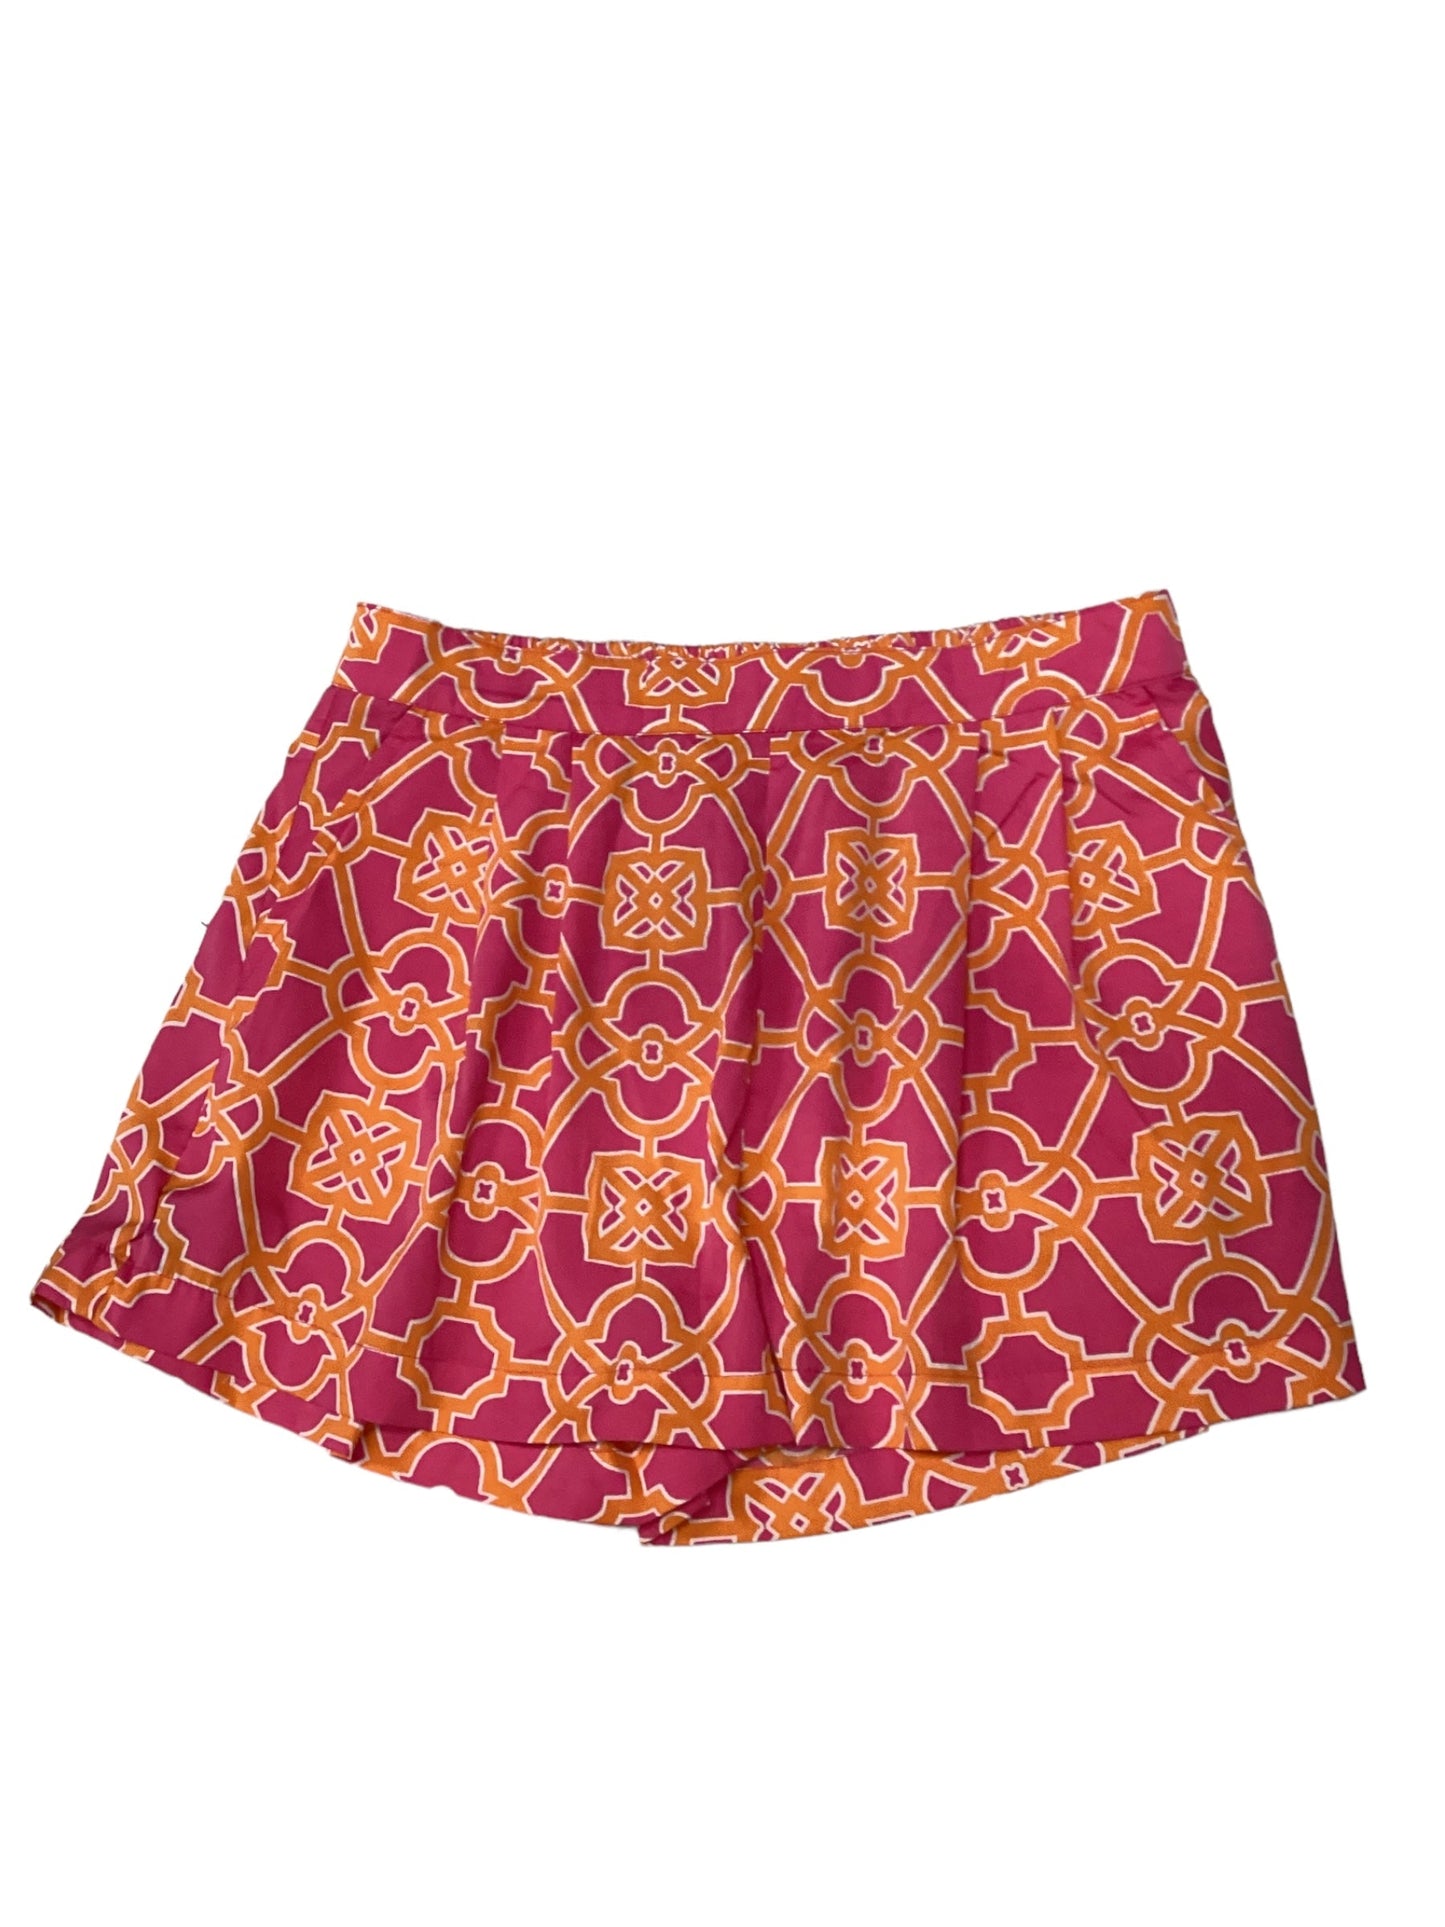 Shorts By Buckhead Betties  Size: M